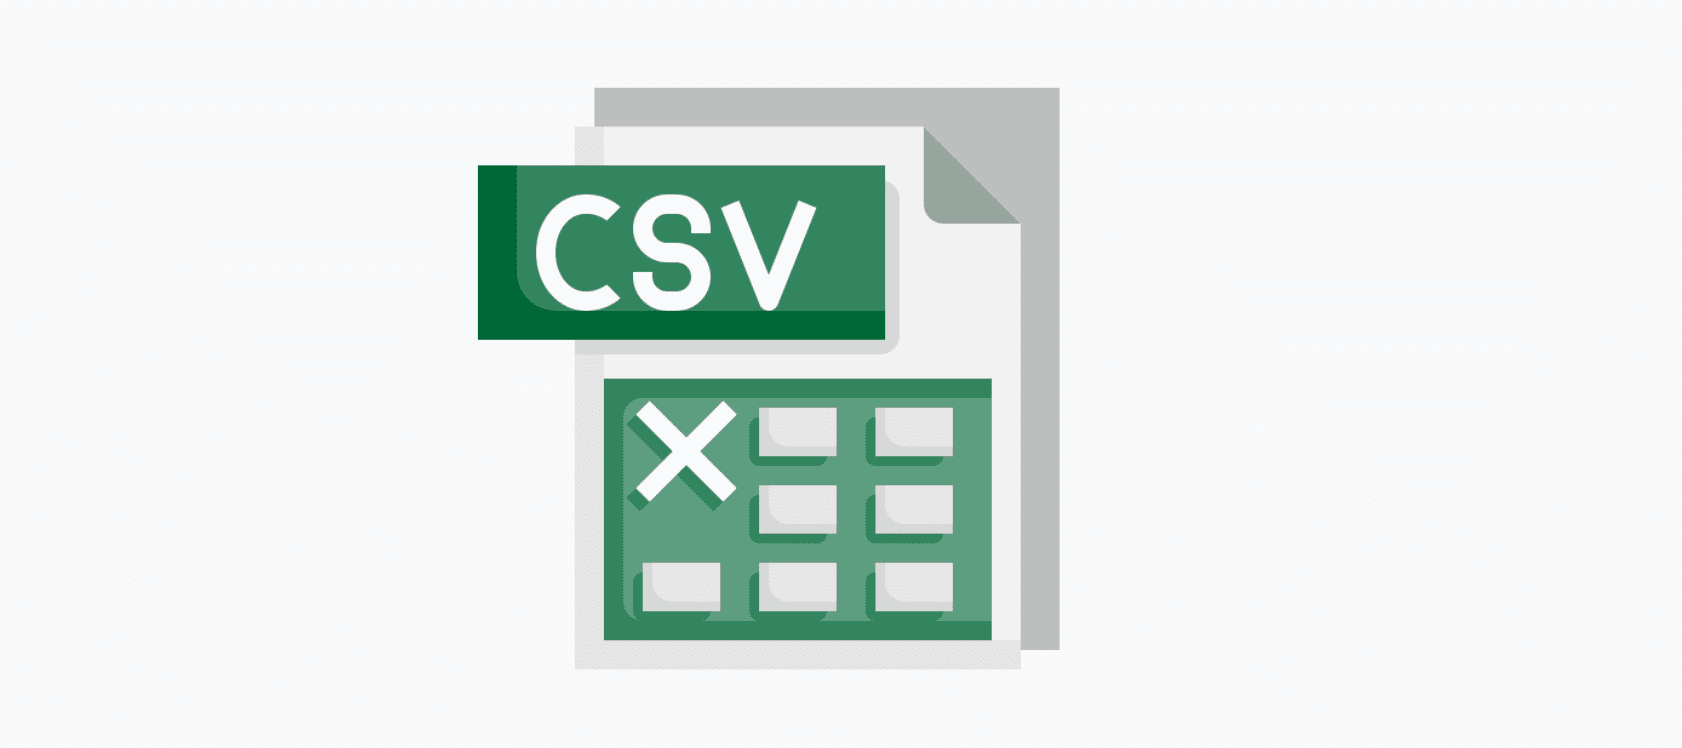 3 Ways to Process CSV Files in Python